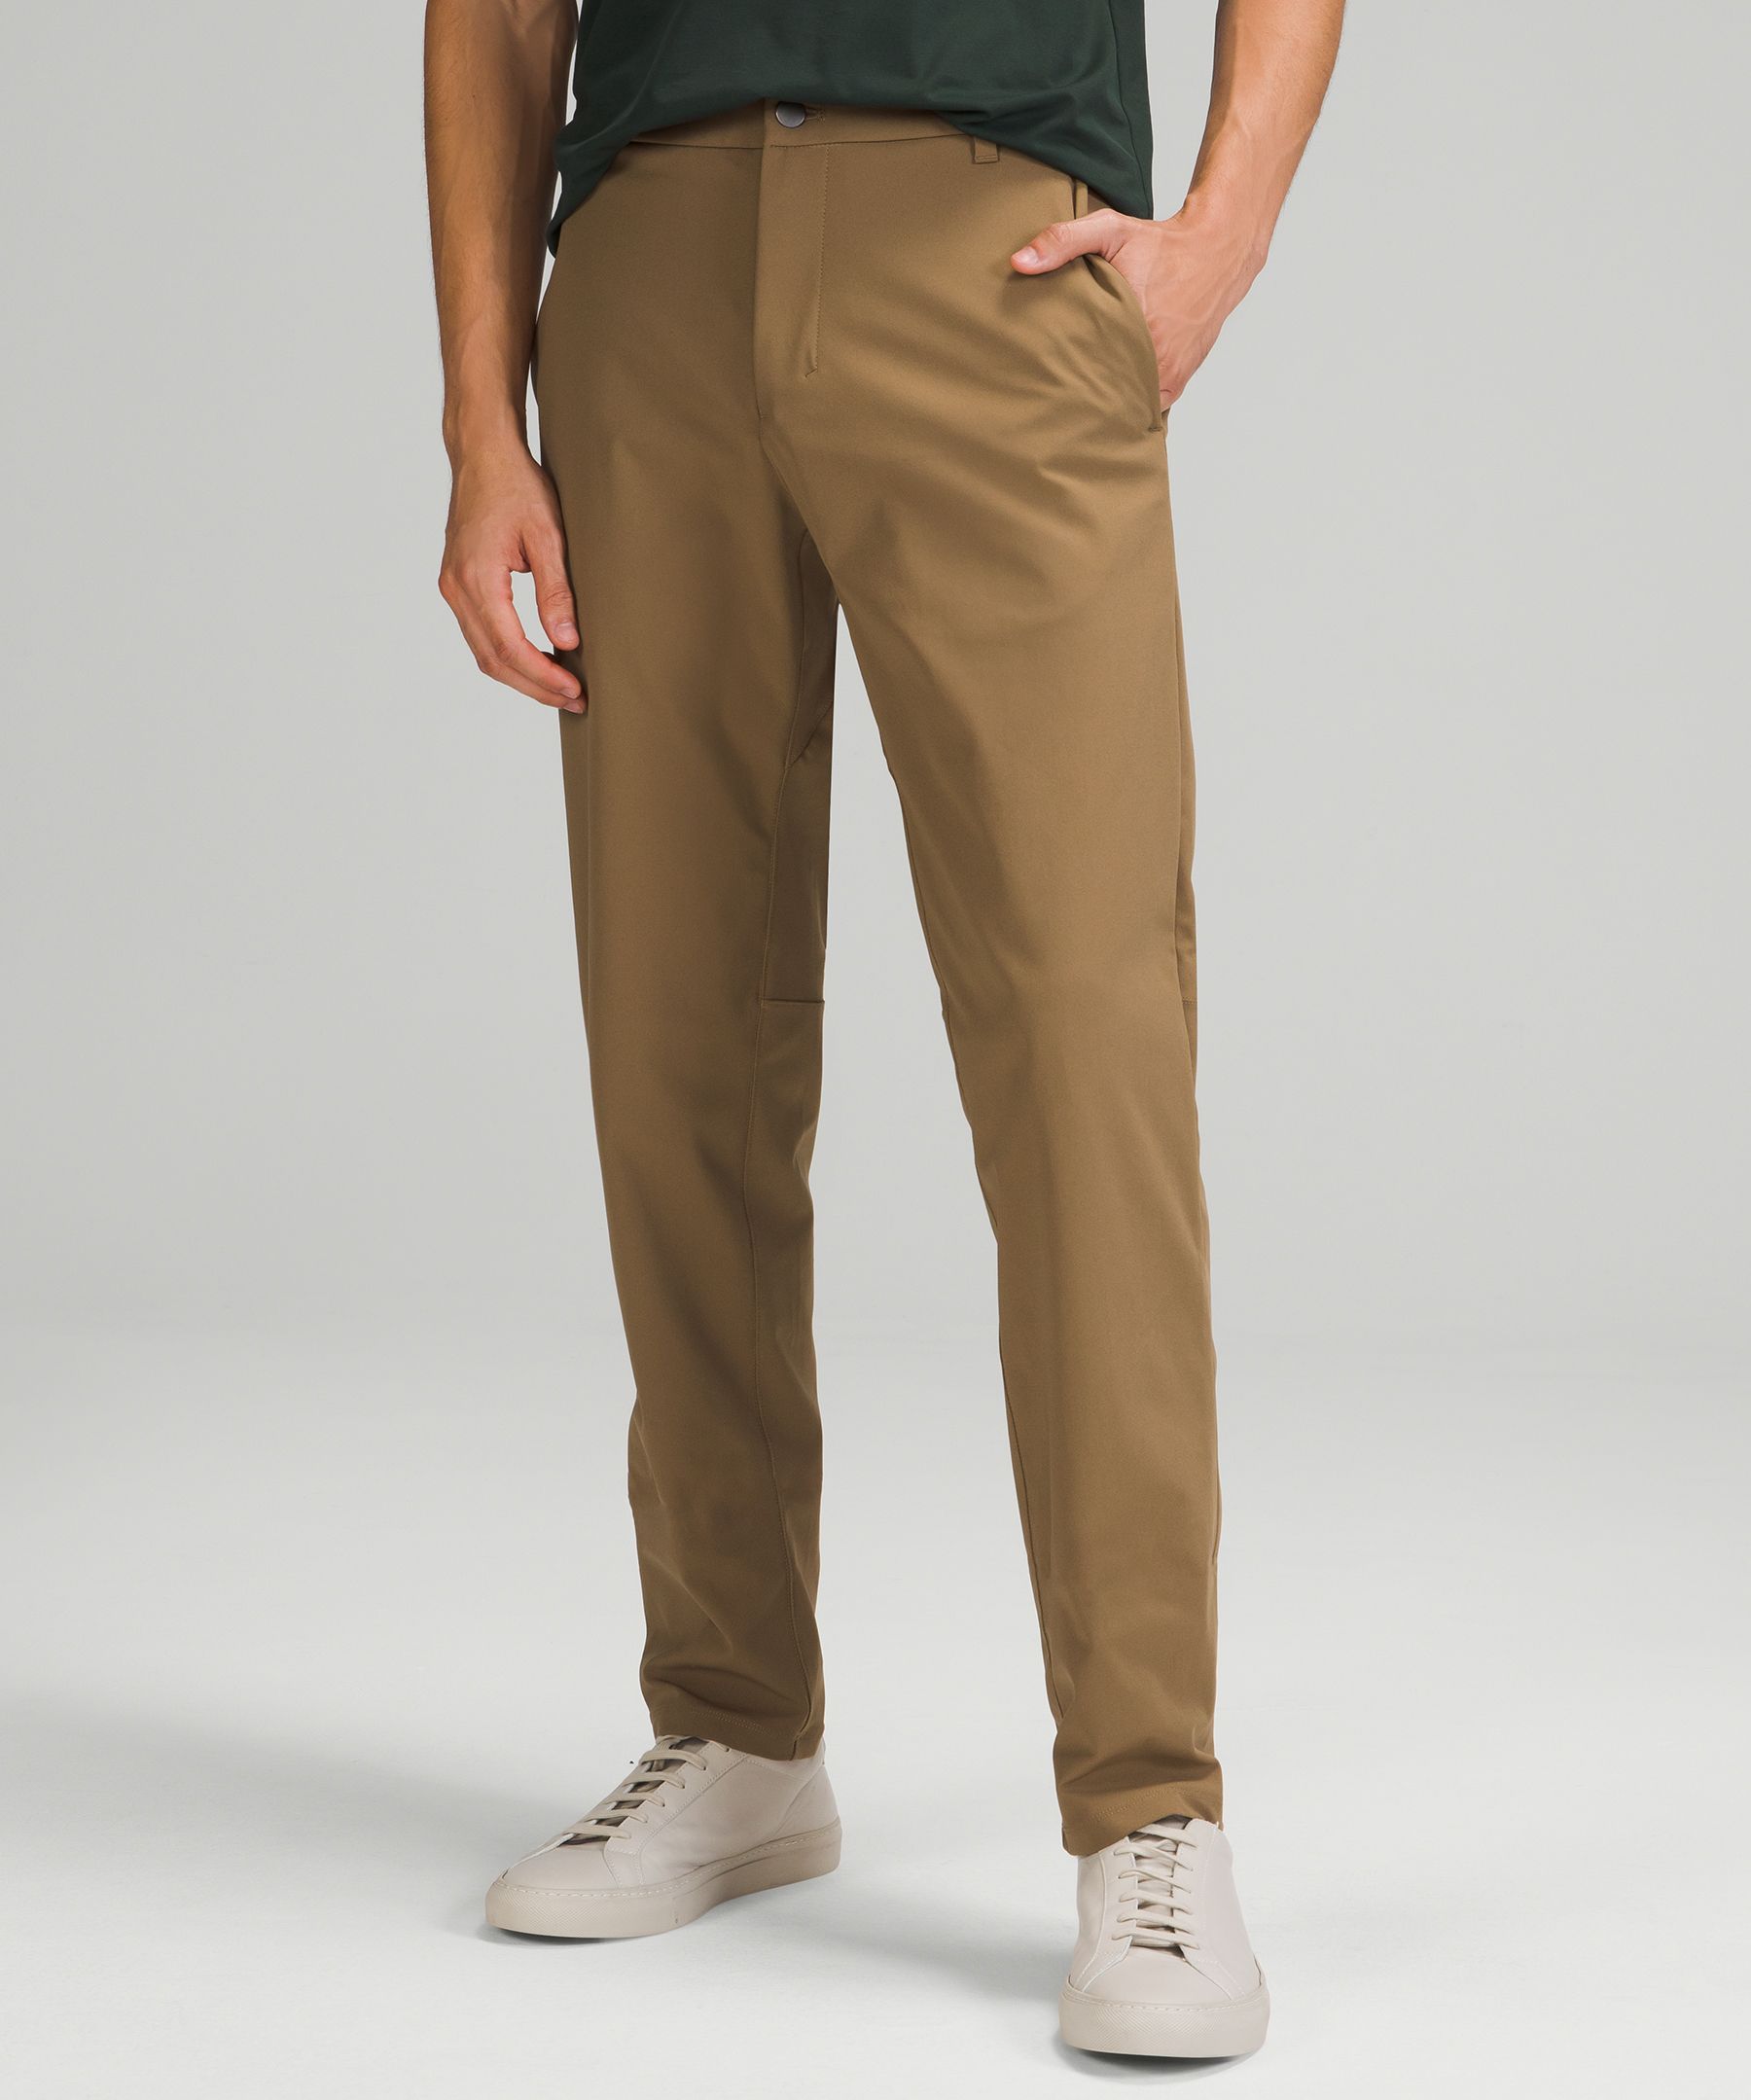 lululemon khaki pants mens